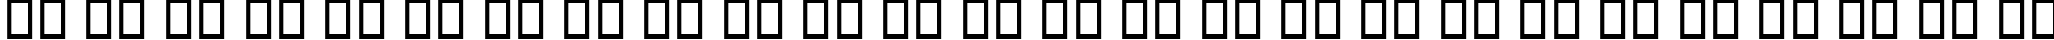 Пример написания английского алфавита шрифтом B Sepideh